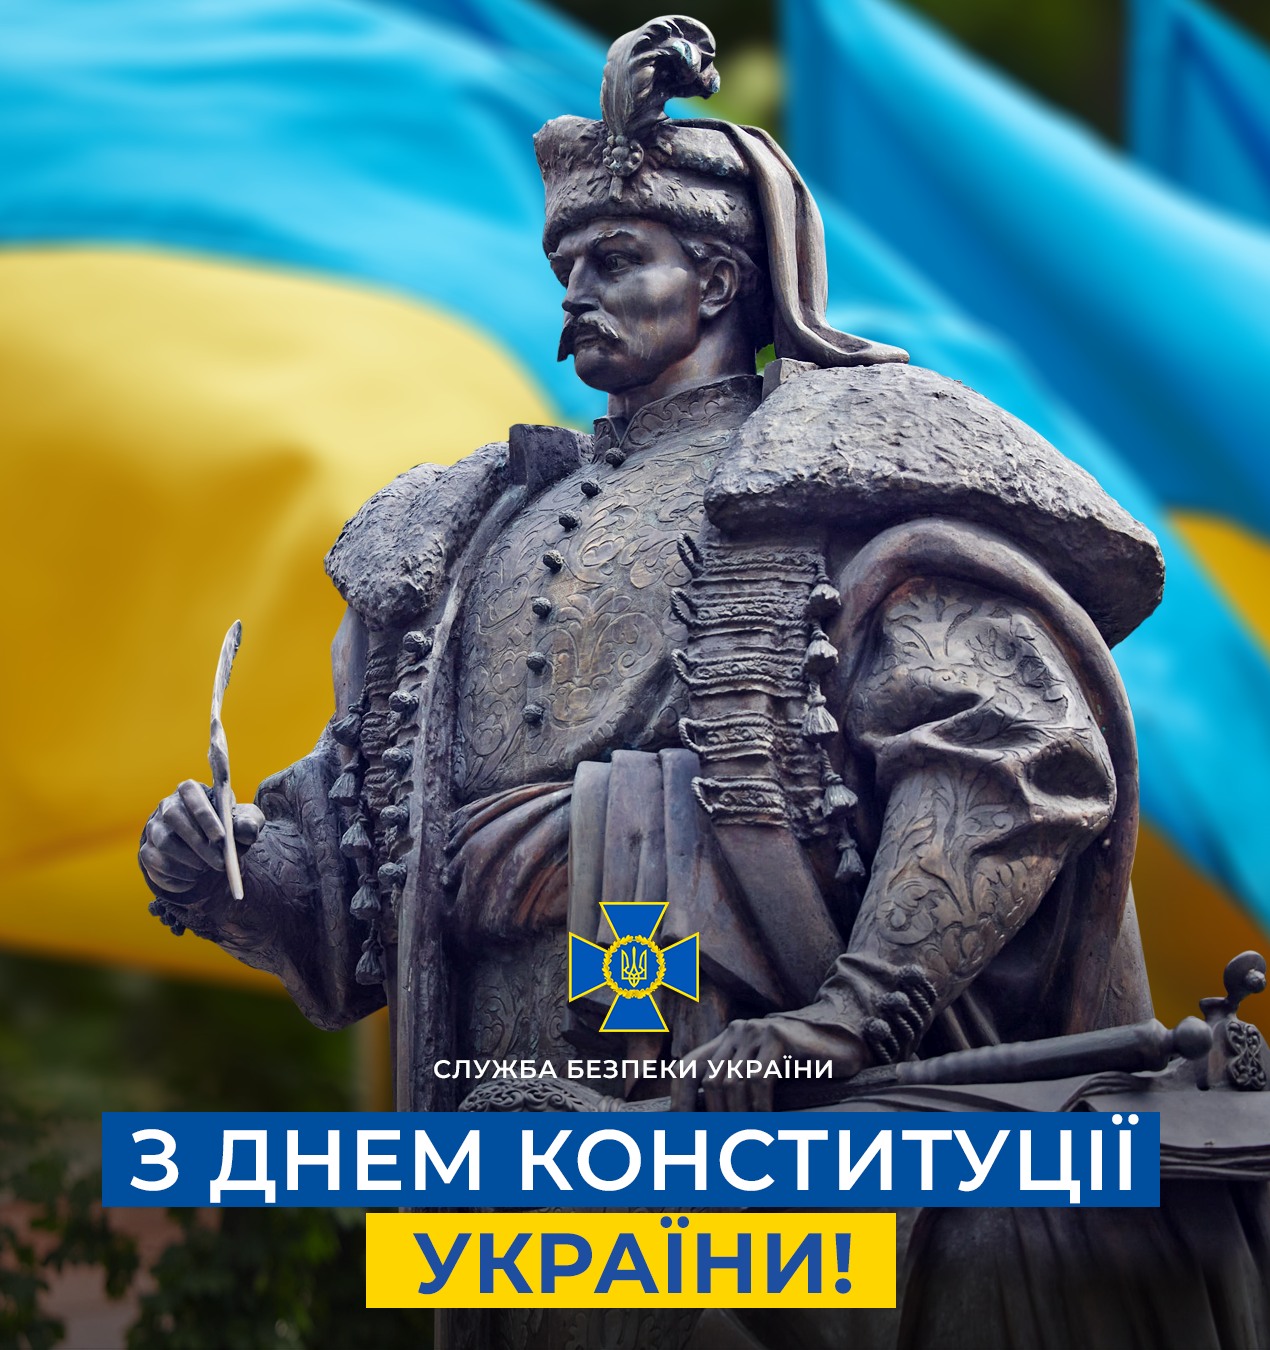 SBU Head Vasyl Malyuk extends greetings to Ukrainians on Constitution Day (Image Courtesy: Facebook)